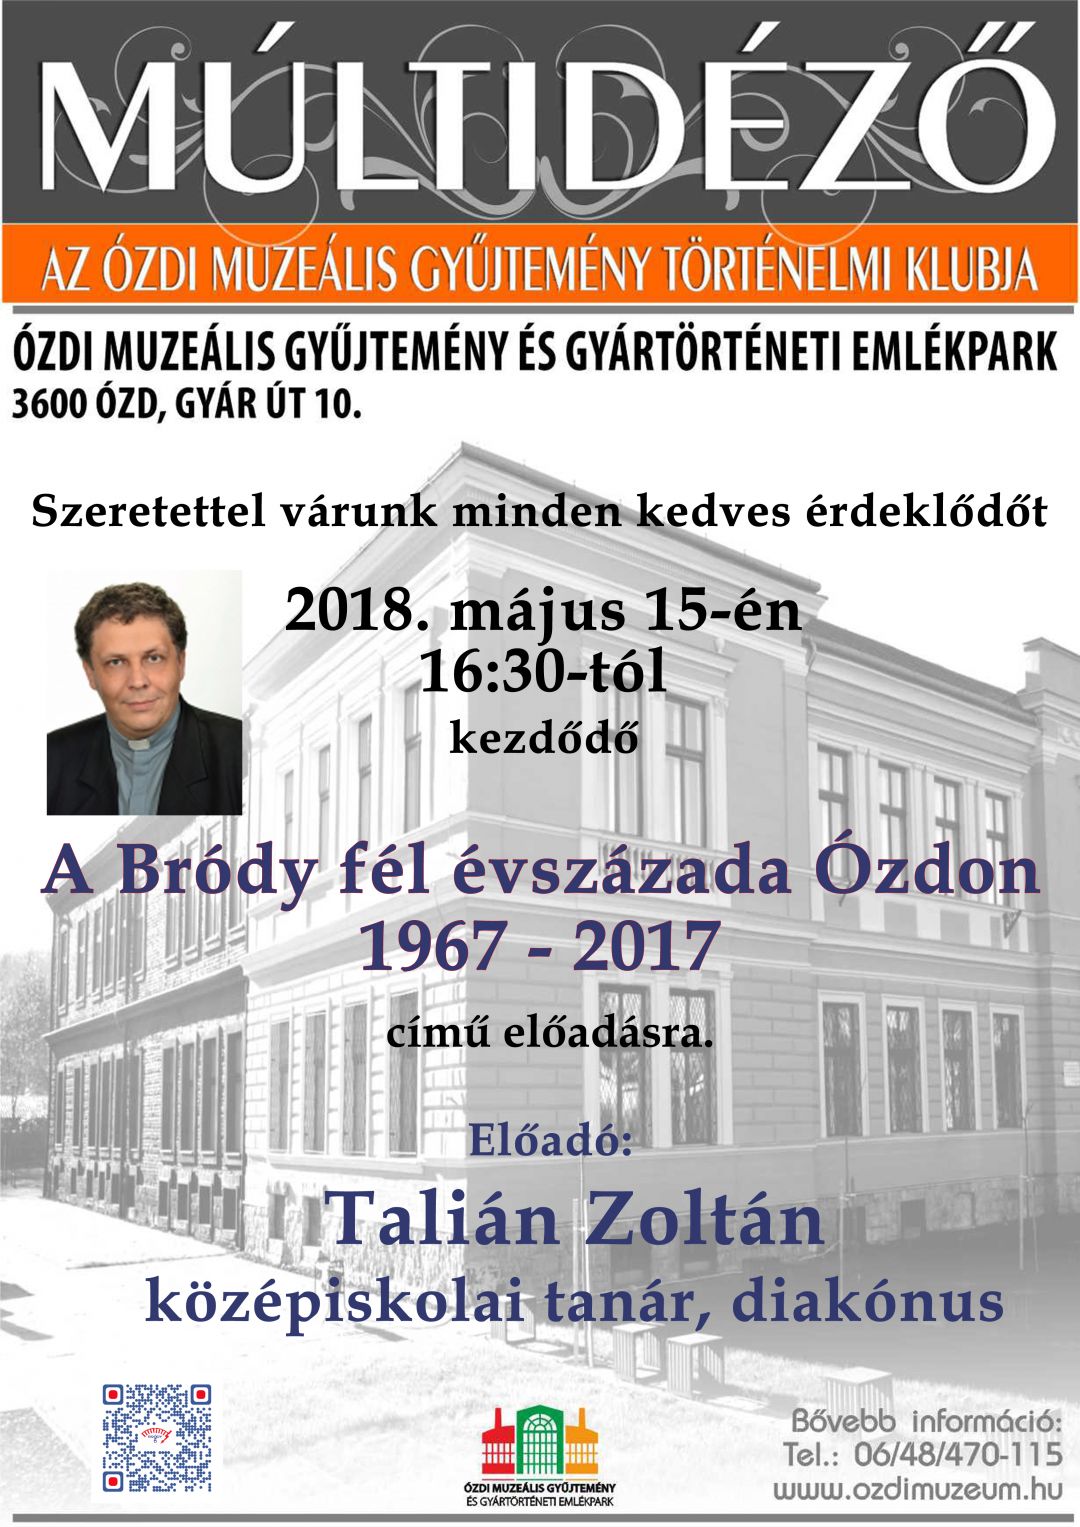 Talián Zoltán, Ózd